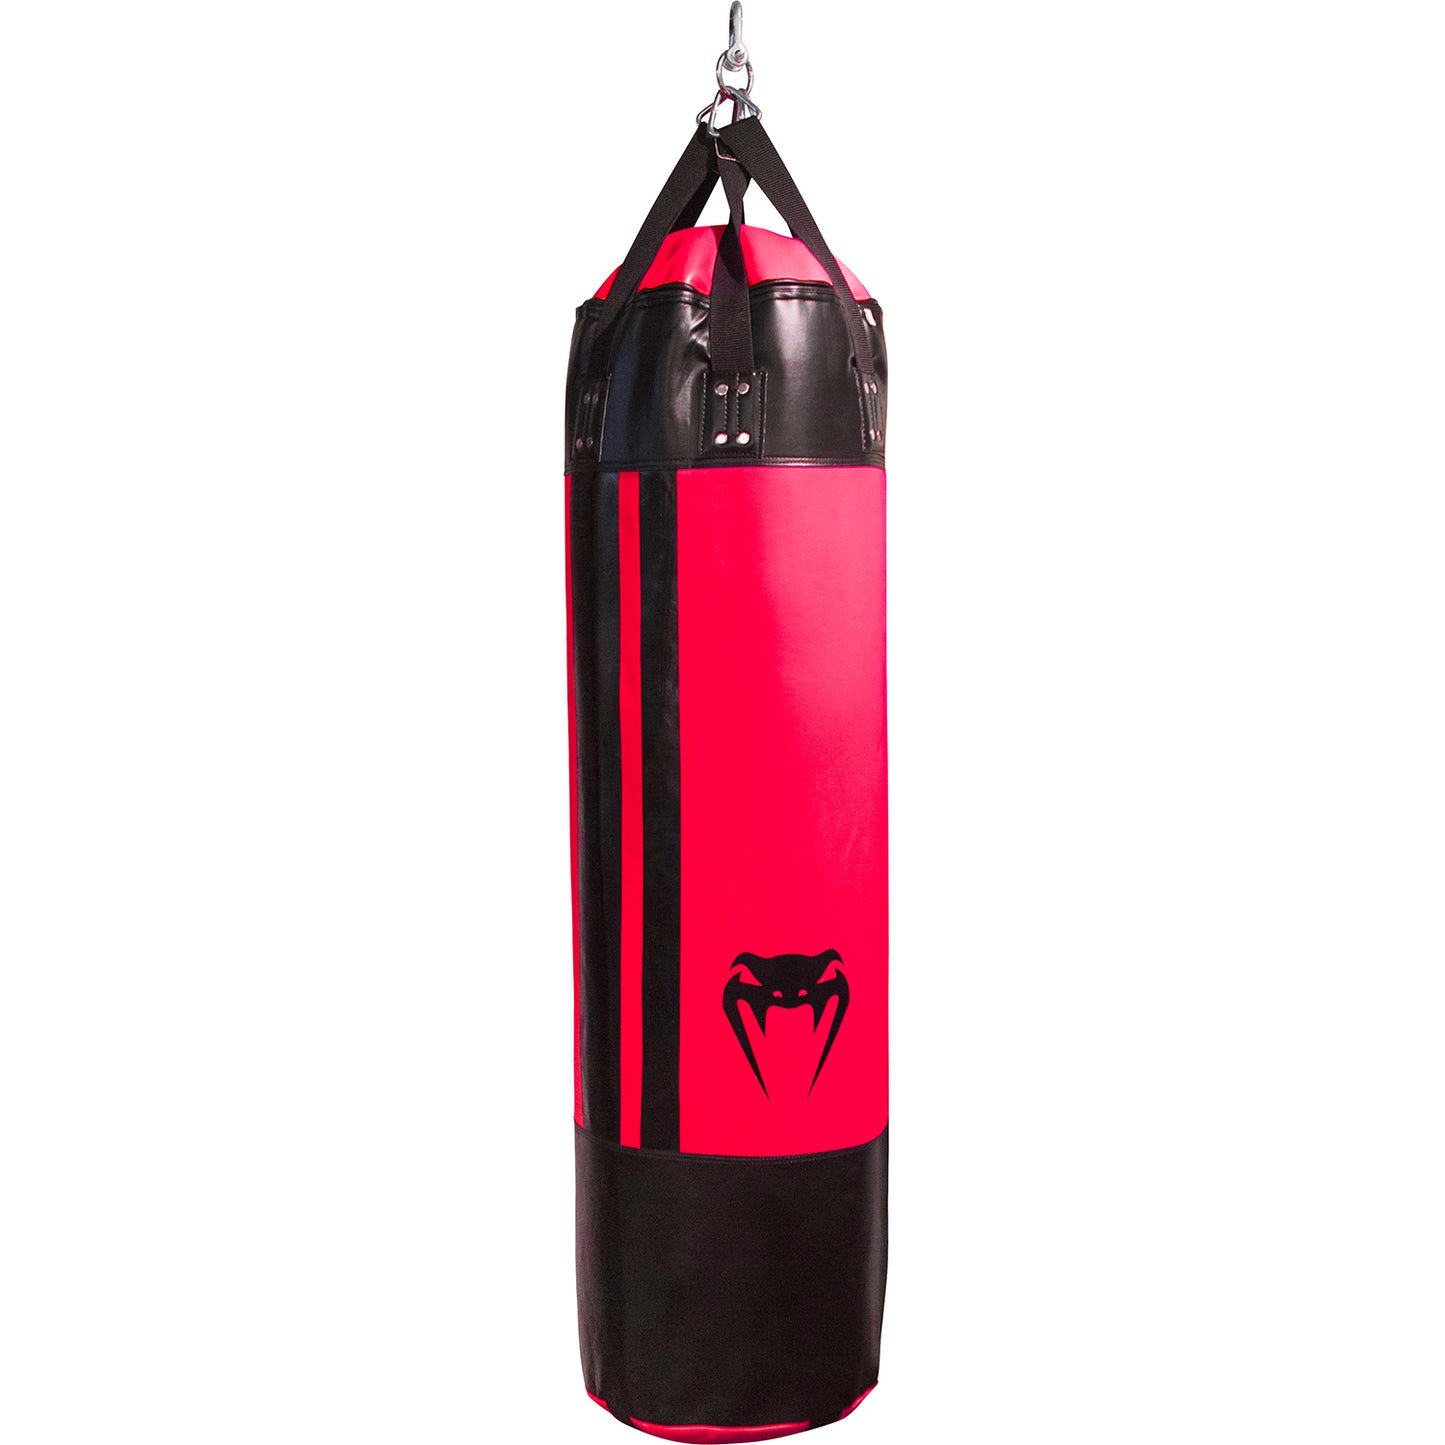 Venum Hurricane Punching Bag - 130cm - Unfilled - Black/Neo Pink